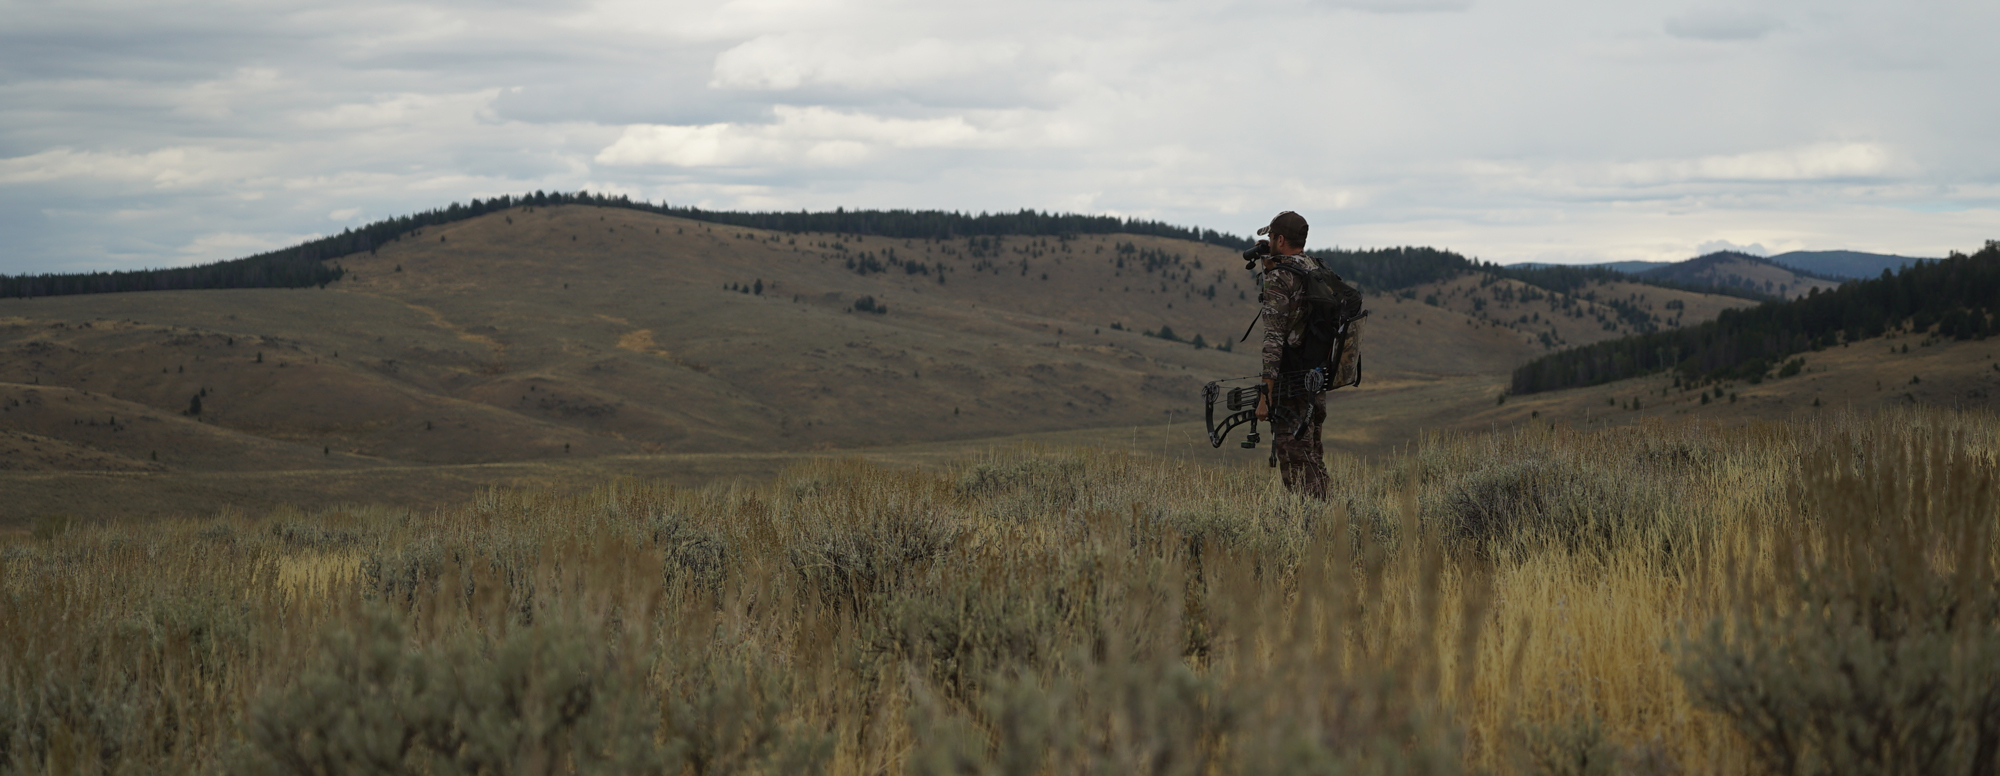 Hunter standing in a field on an archery antelope hunt.